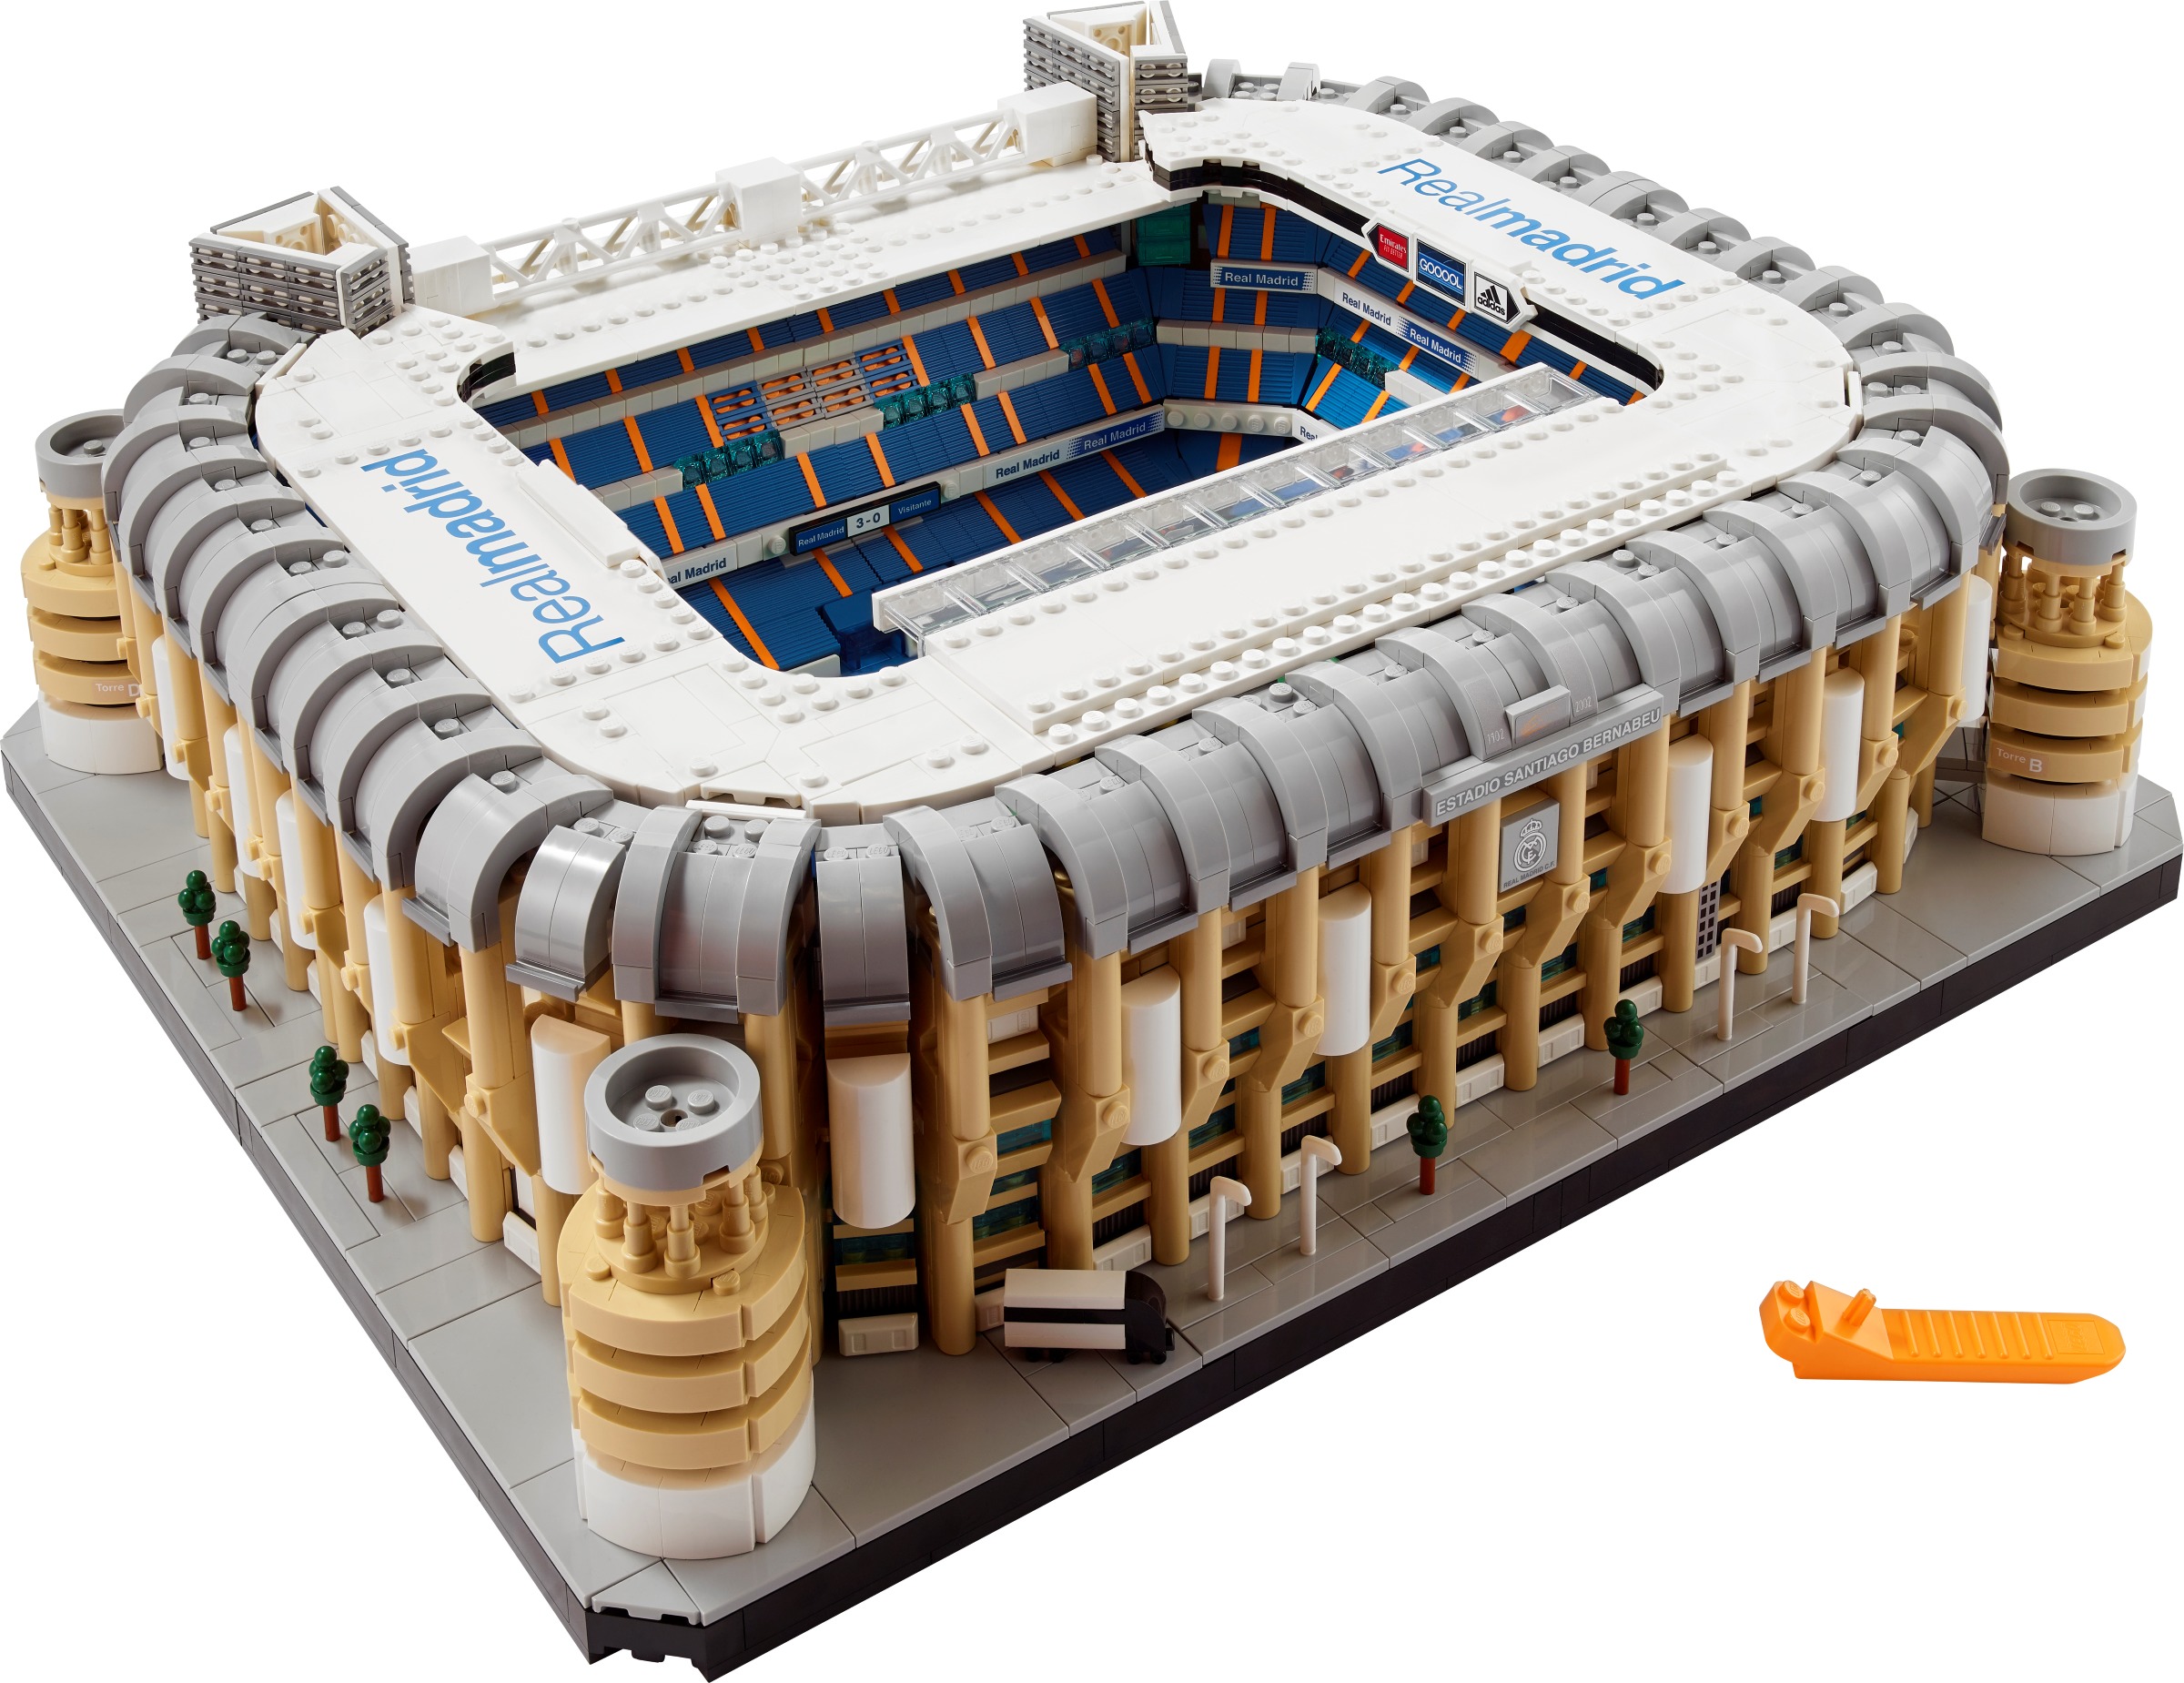 LEGO Creator Expert 10299 - Stadion Realu Madryt - Santiago Bernabéu